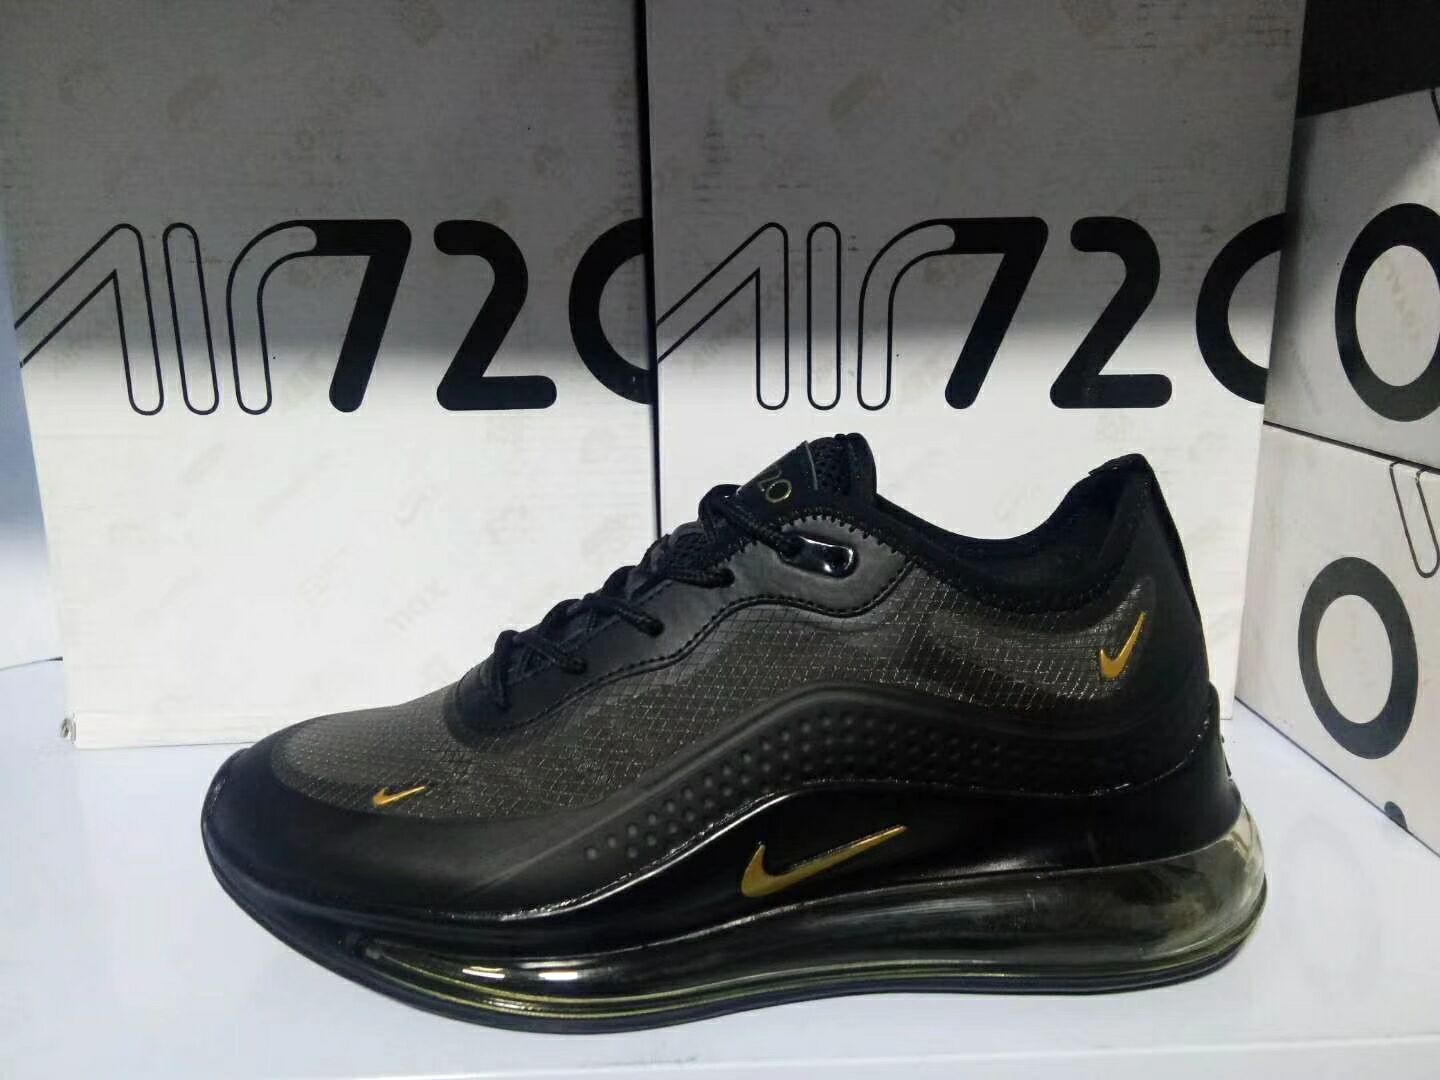 Nike Air Max 720 II Black Gold Shoes